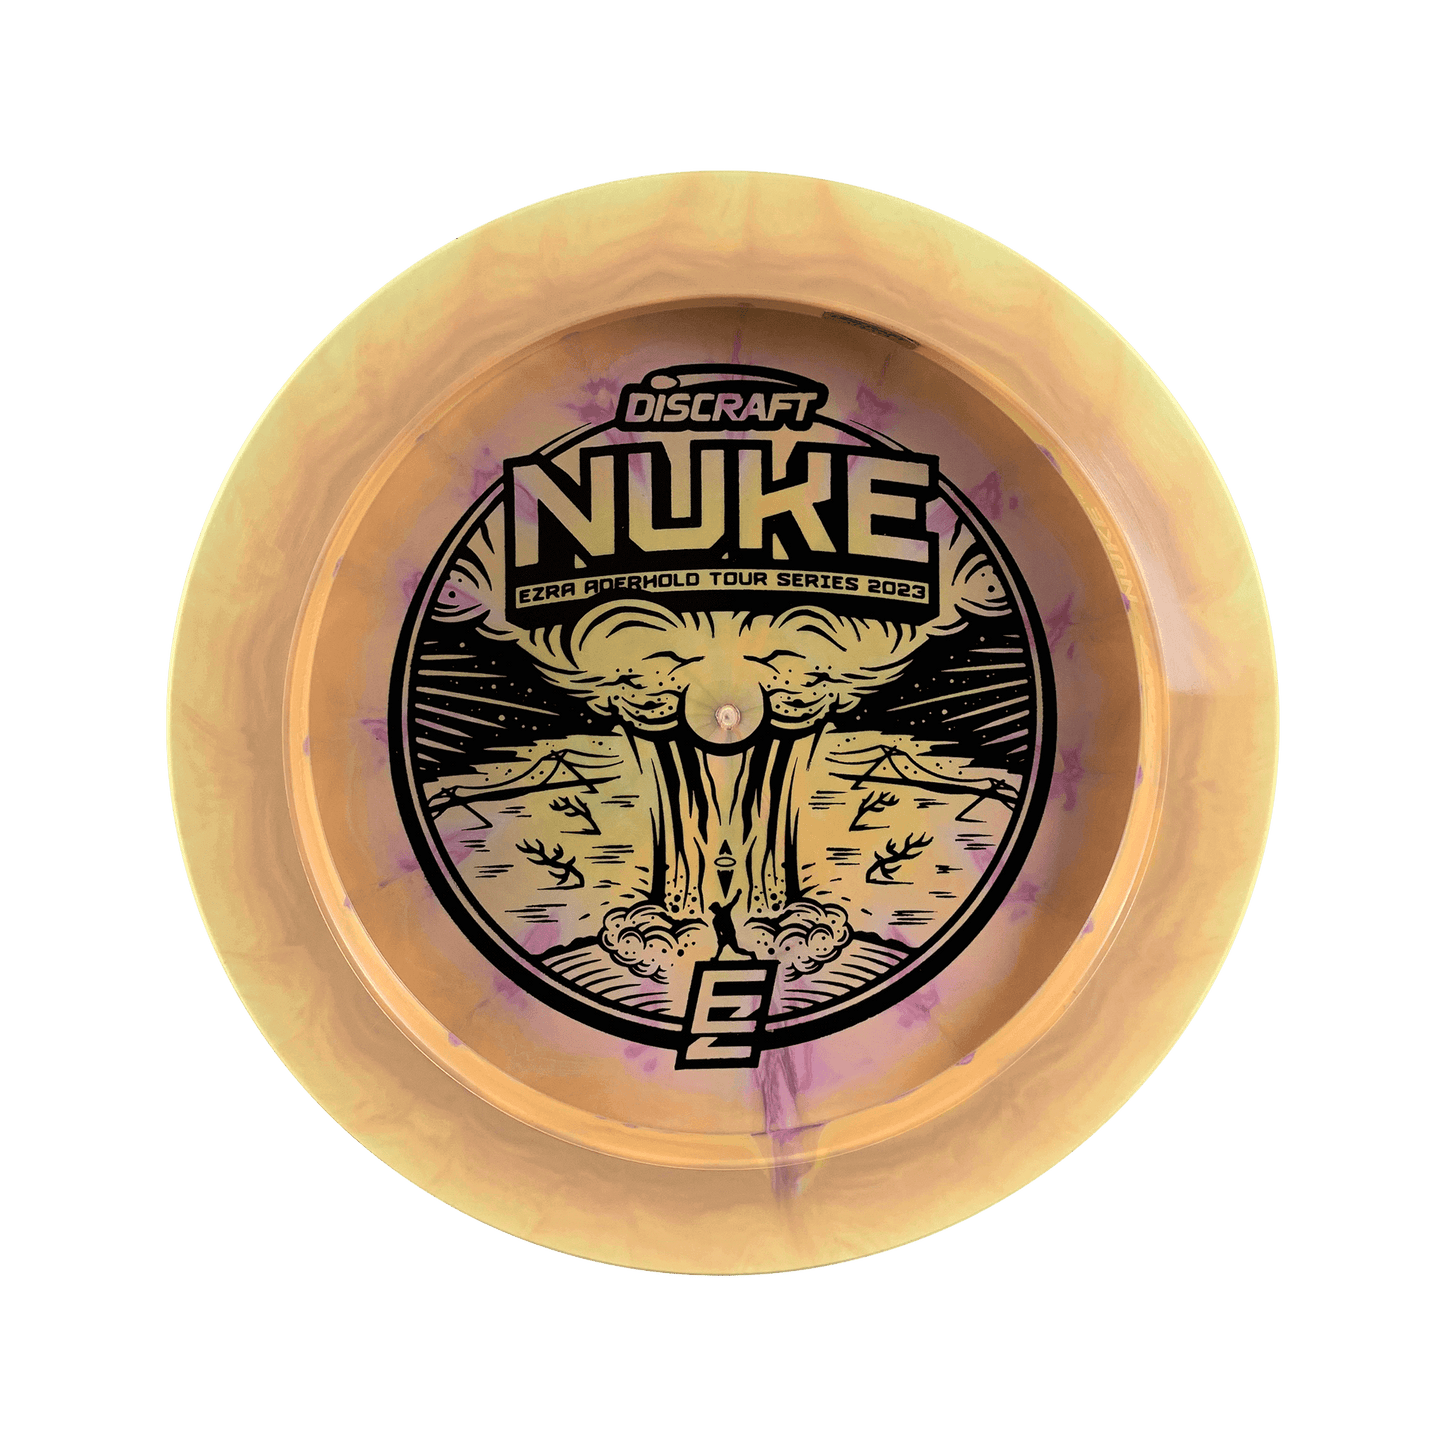 ESP Swirl Nuke - Ezra Aderhold Tour Series 2023 Disc Discraft multi / yellow orange purple 173 